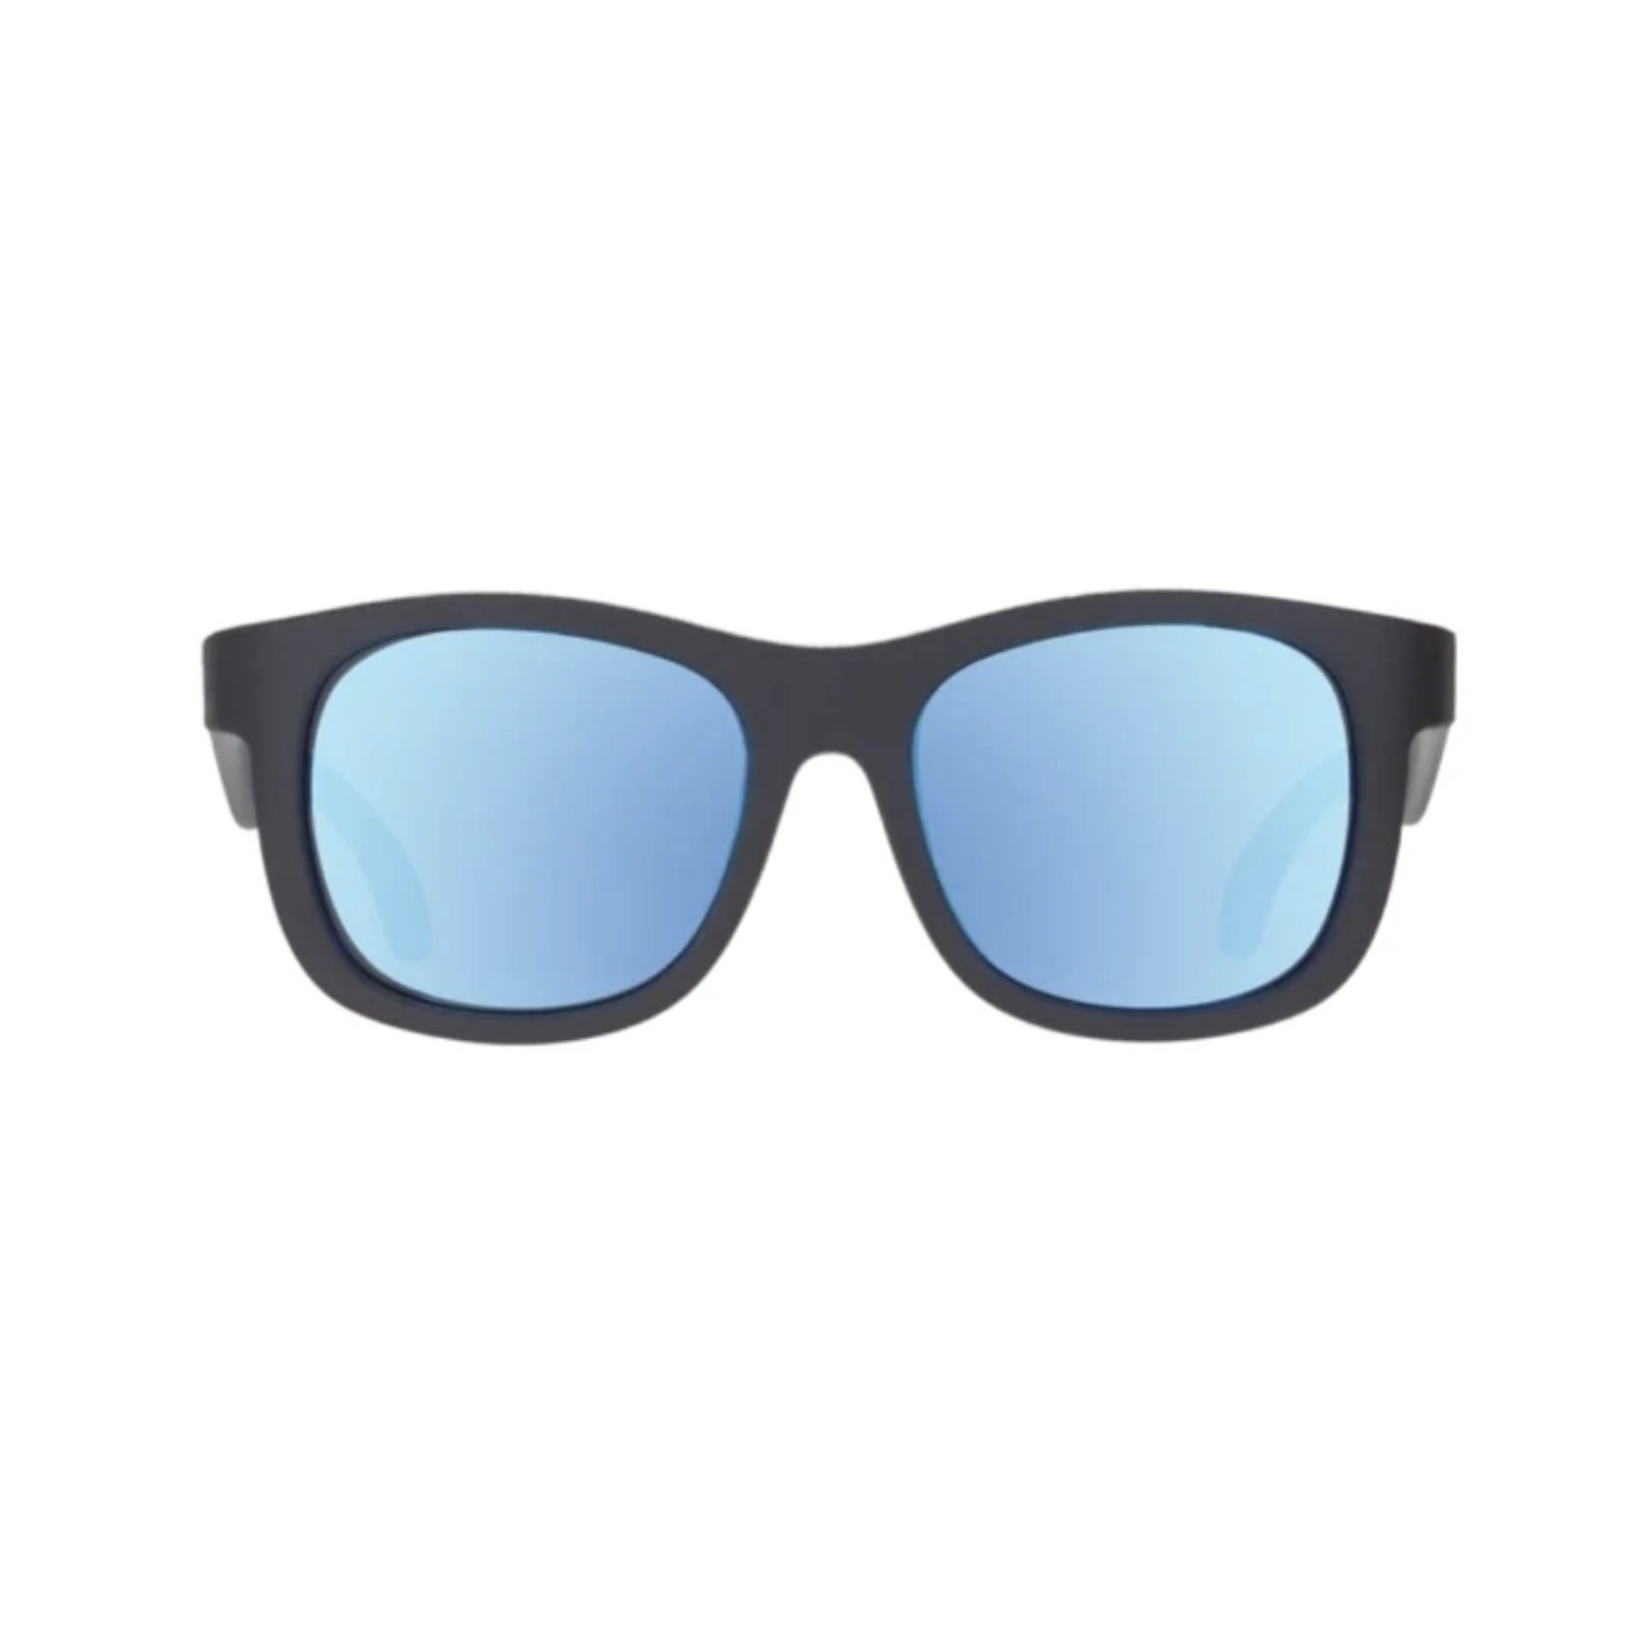 Babiators Blue Series Navigator Polarized - The scout(Black frames with blue lenses)